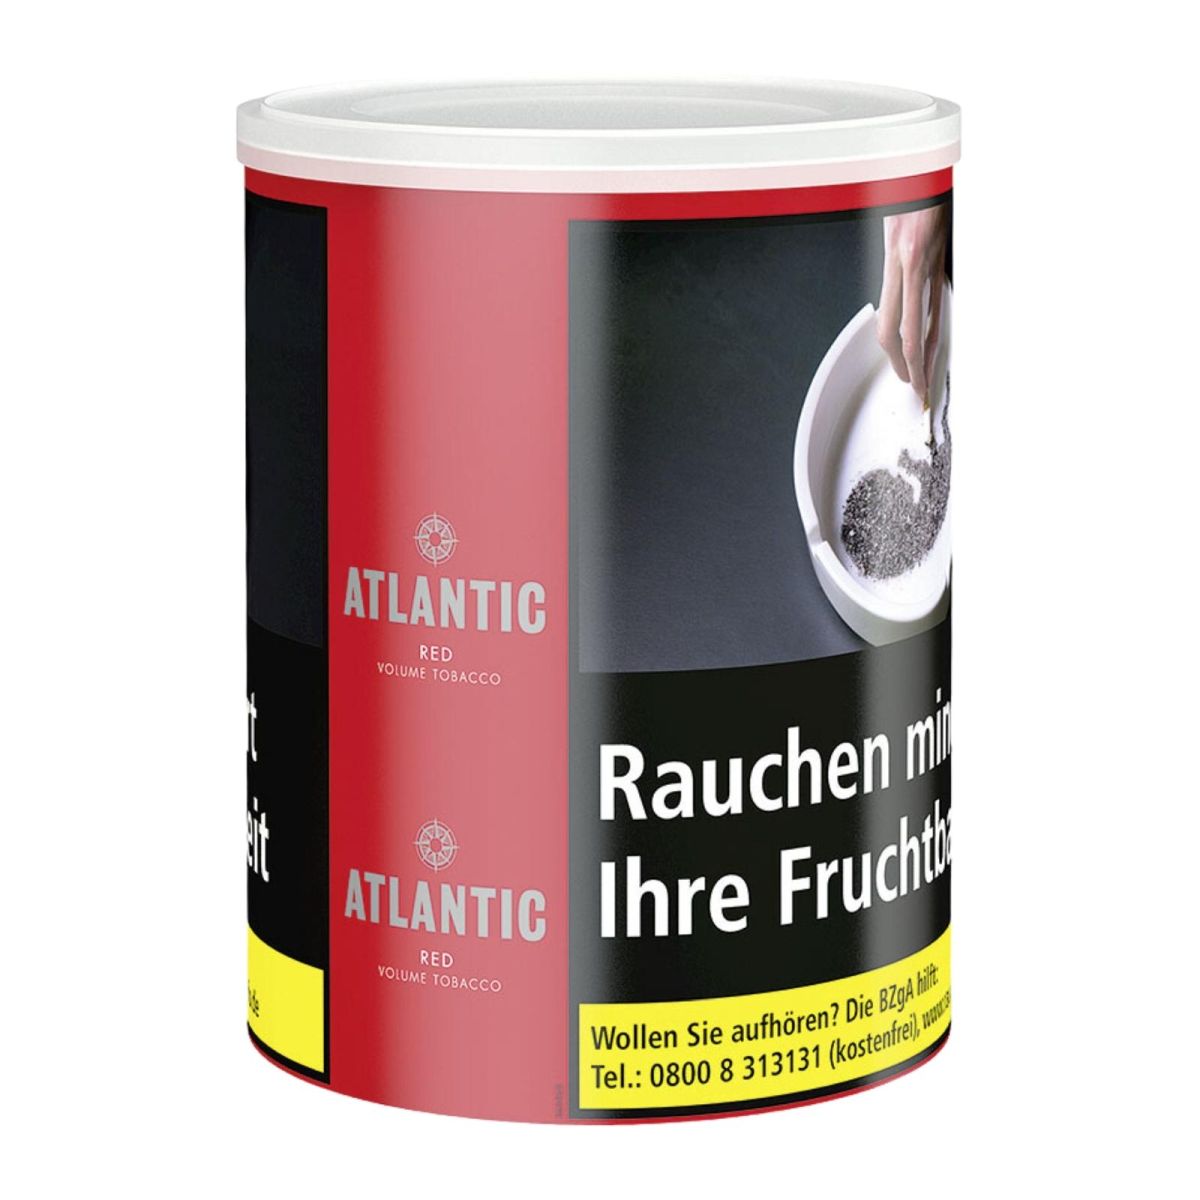 Atlantic Atlantic Red Volume Tobacco bei www.Tabakring.de kaufen